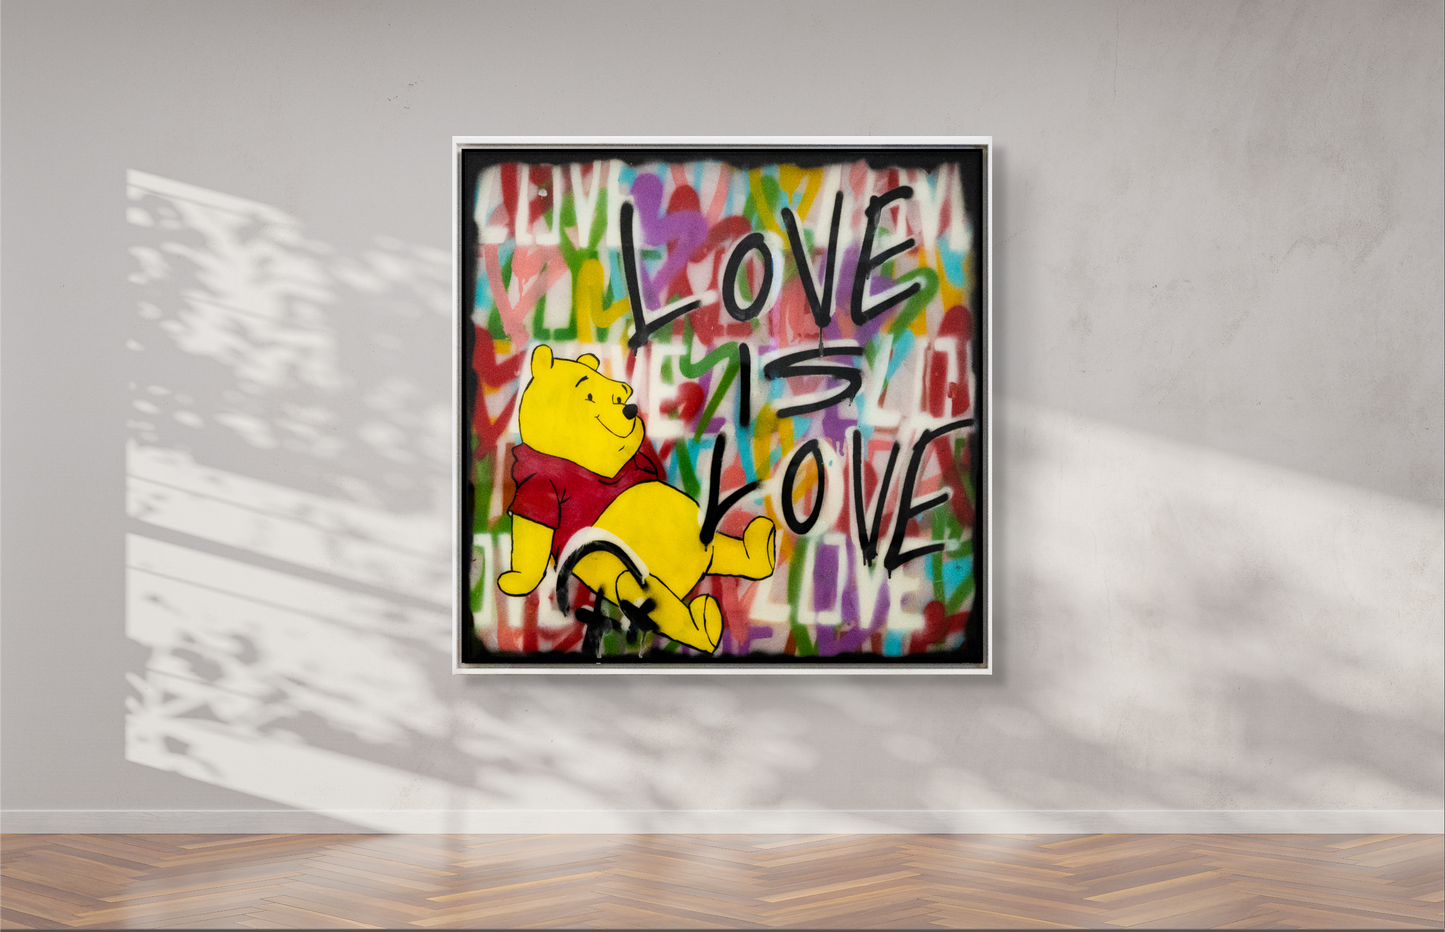 LOVE IS LOVE $3300 - ARTBYMRNICE